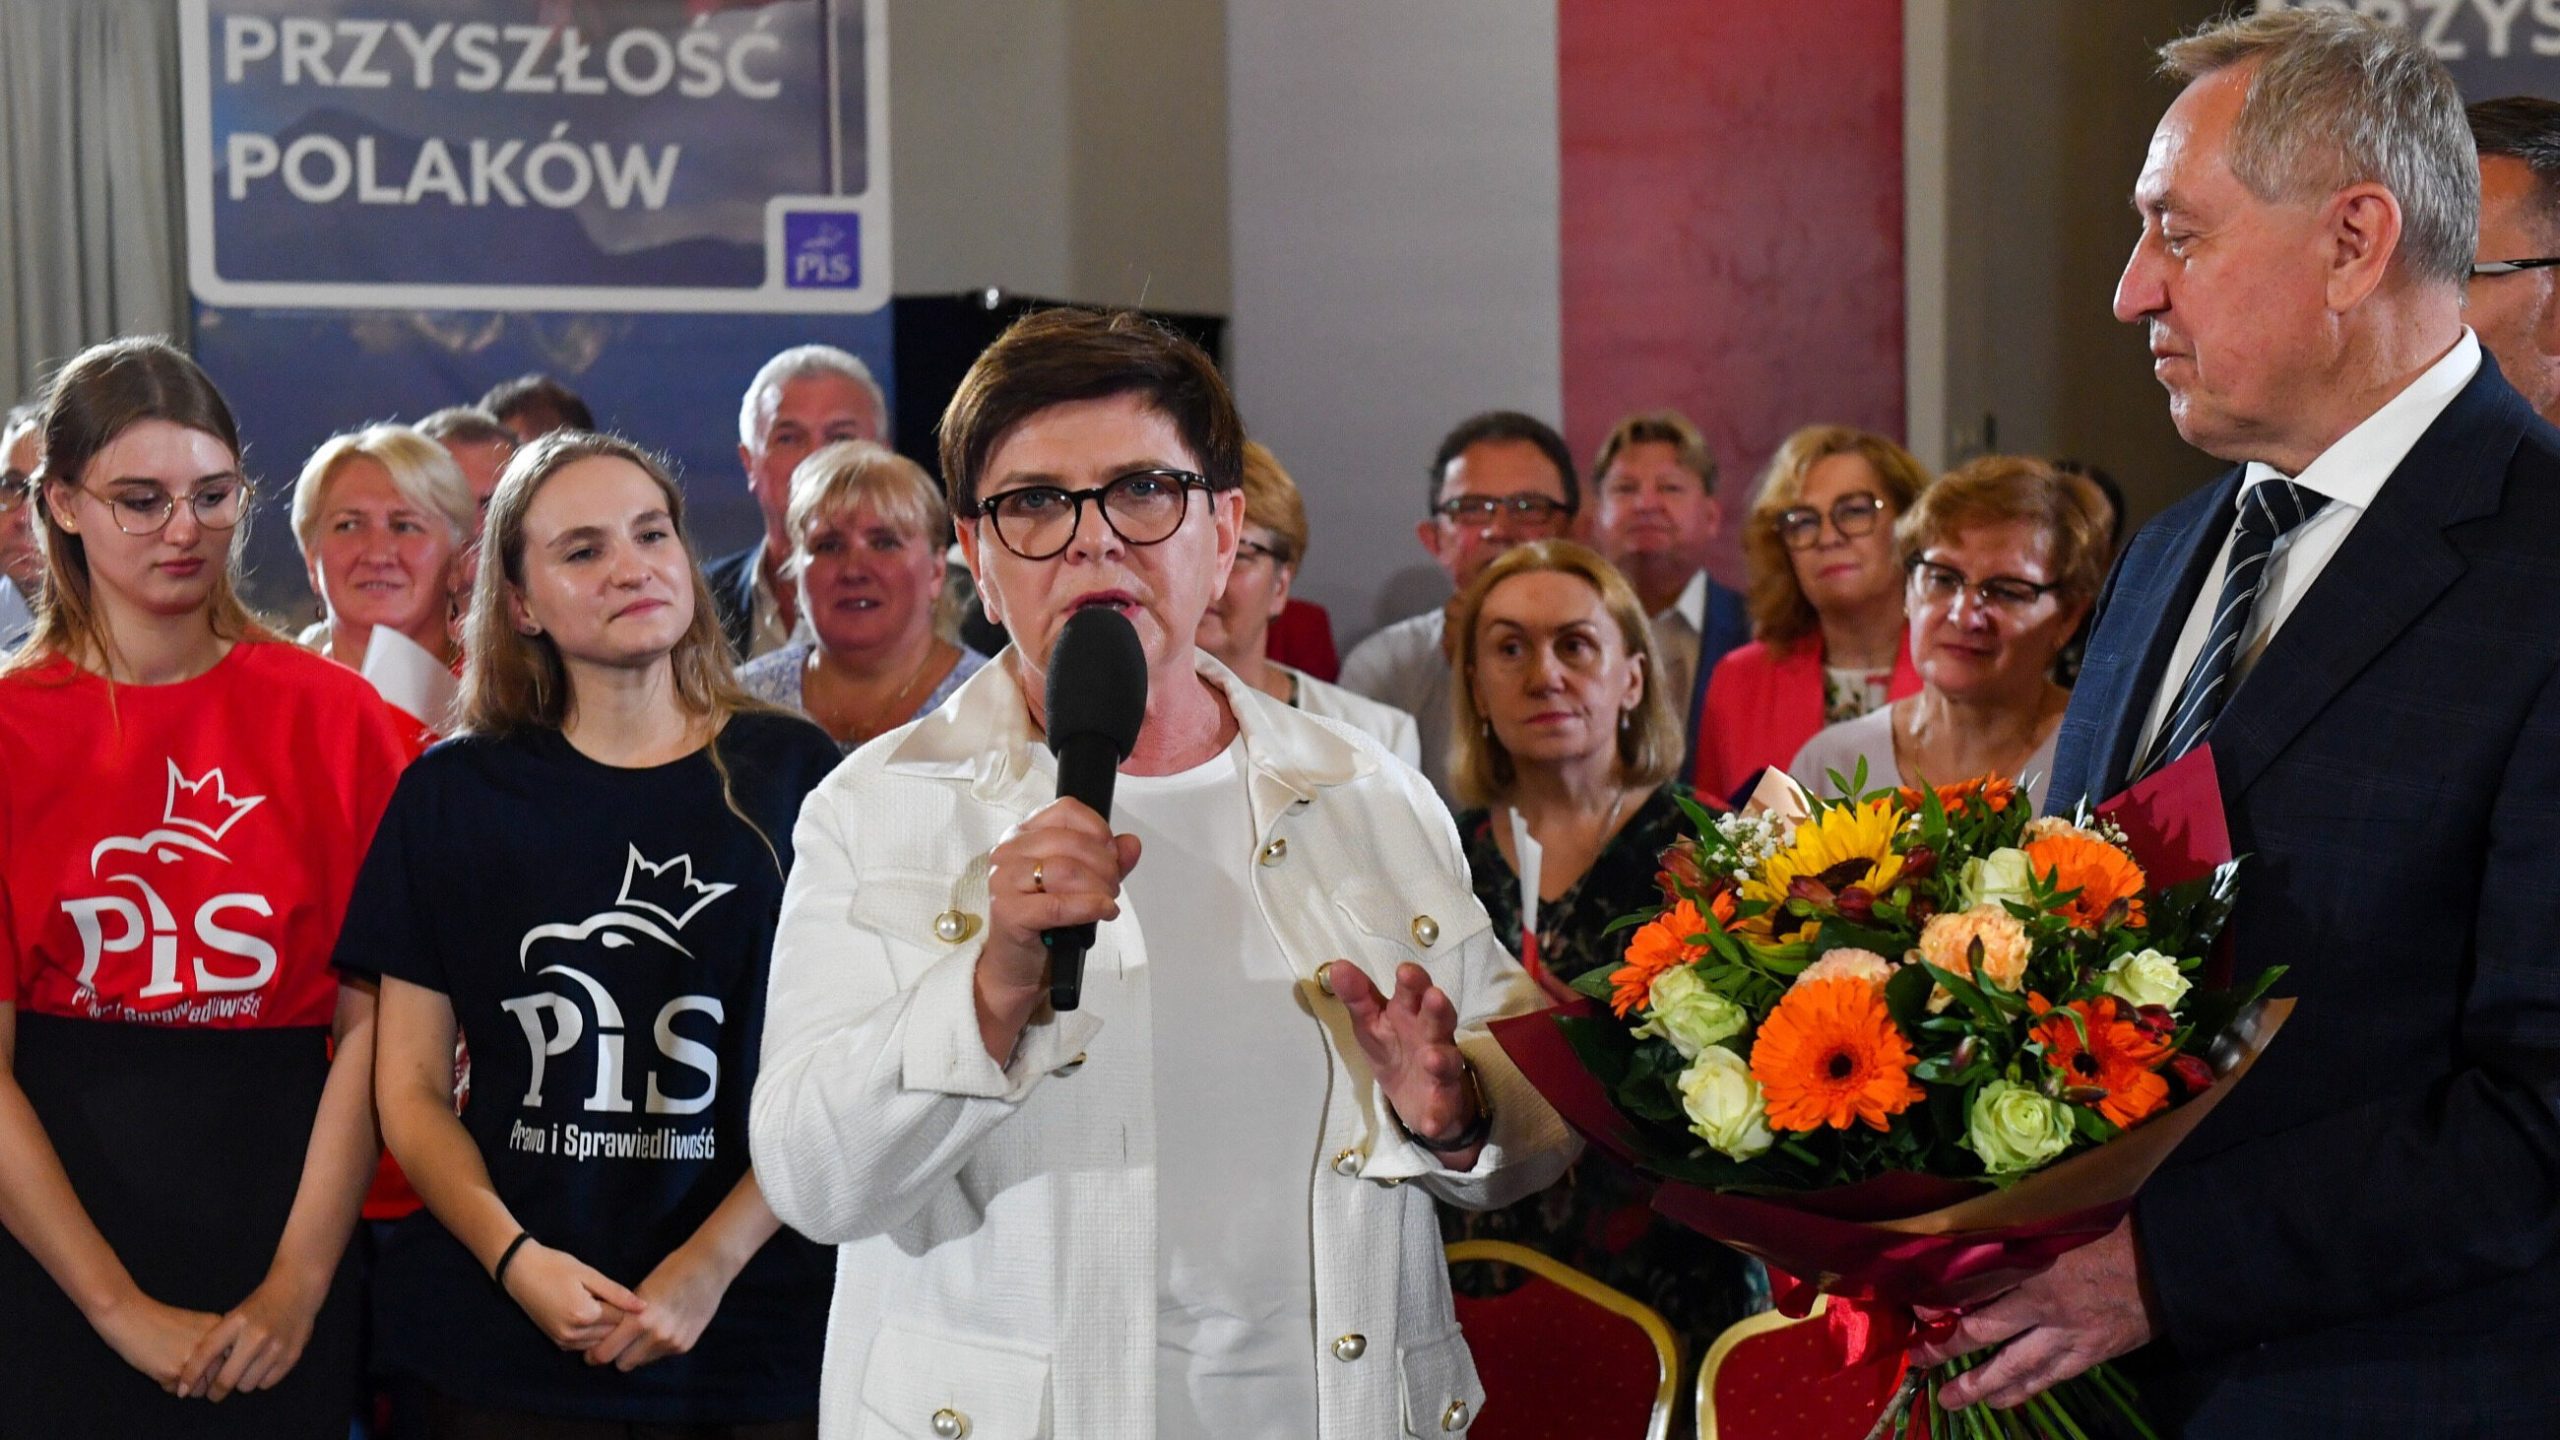 Beata Szydło thunders at a meeting in Pułtusk.  She referred to Donald Tusk